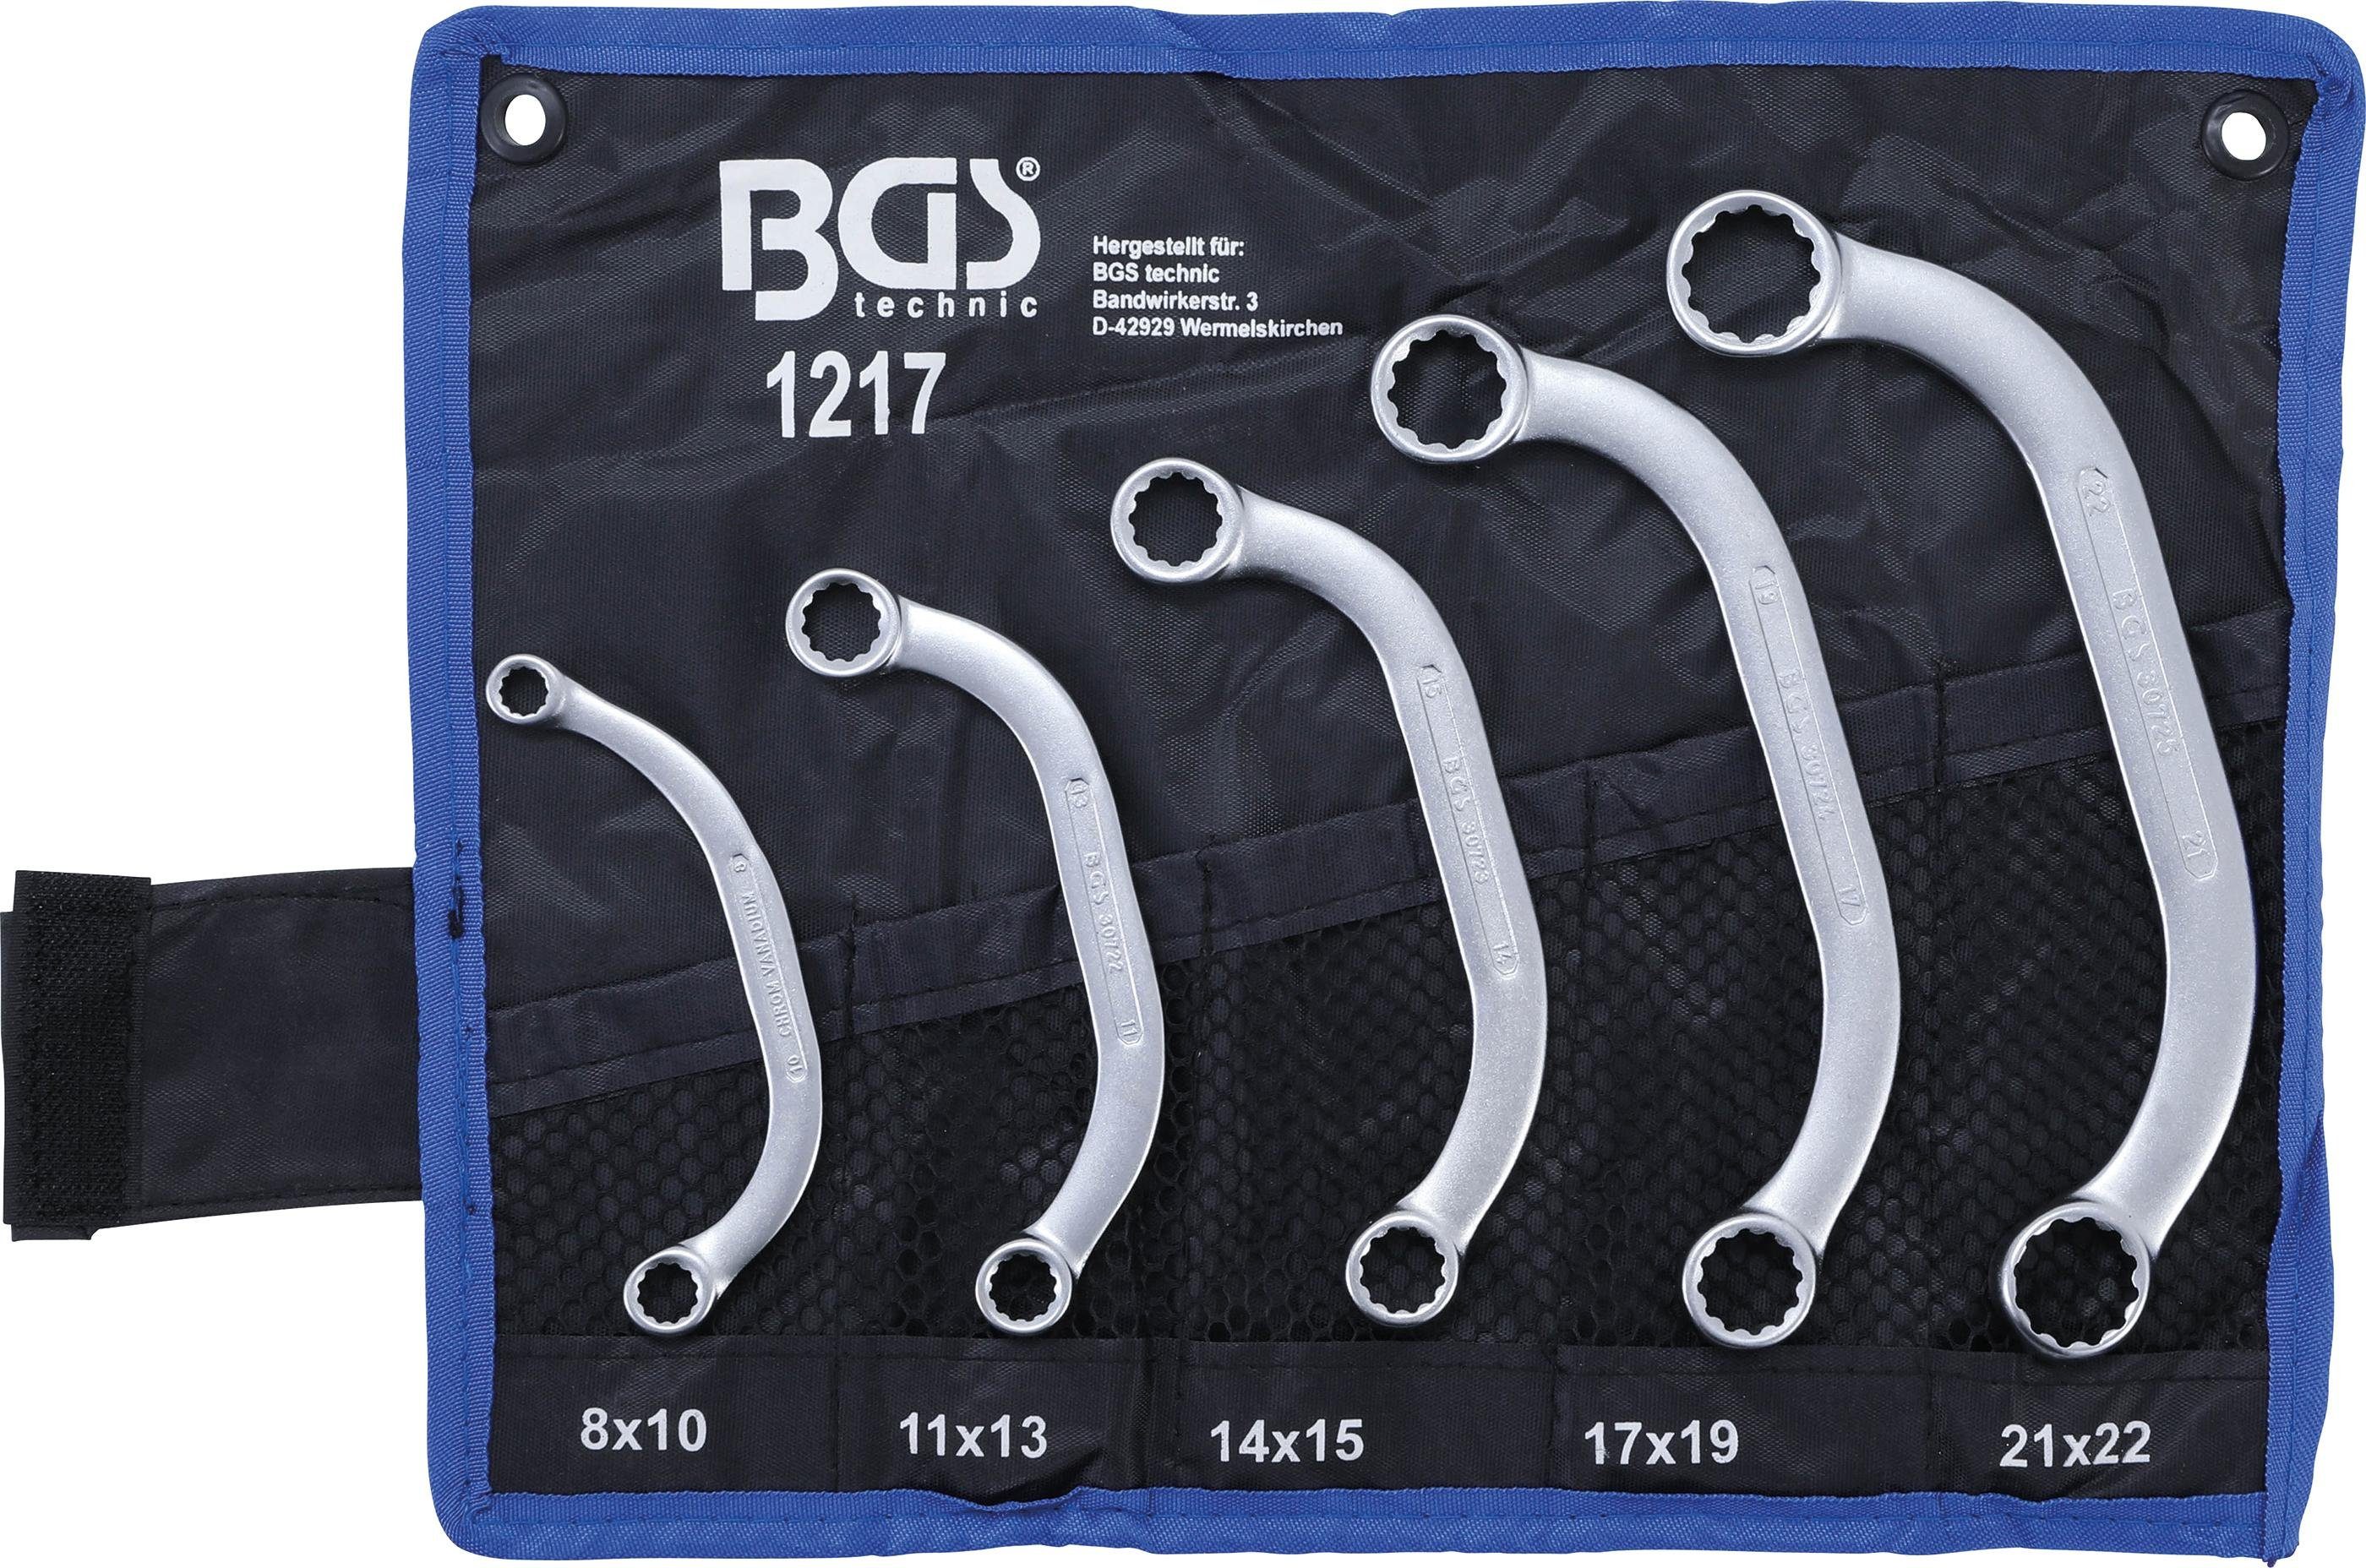 BGS technic Ringschlüssel Starter- und Blockschlüssel-Satz, 8 x 10 - 21 x 22 mm, 5-tlg.